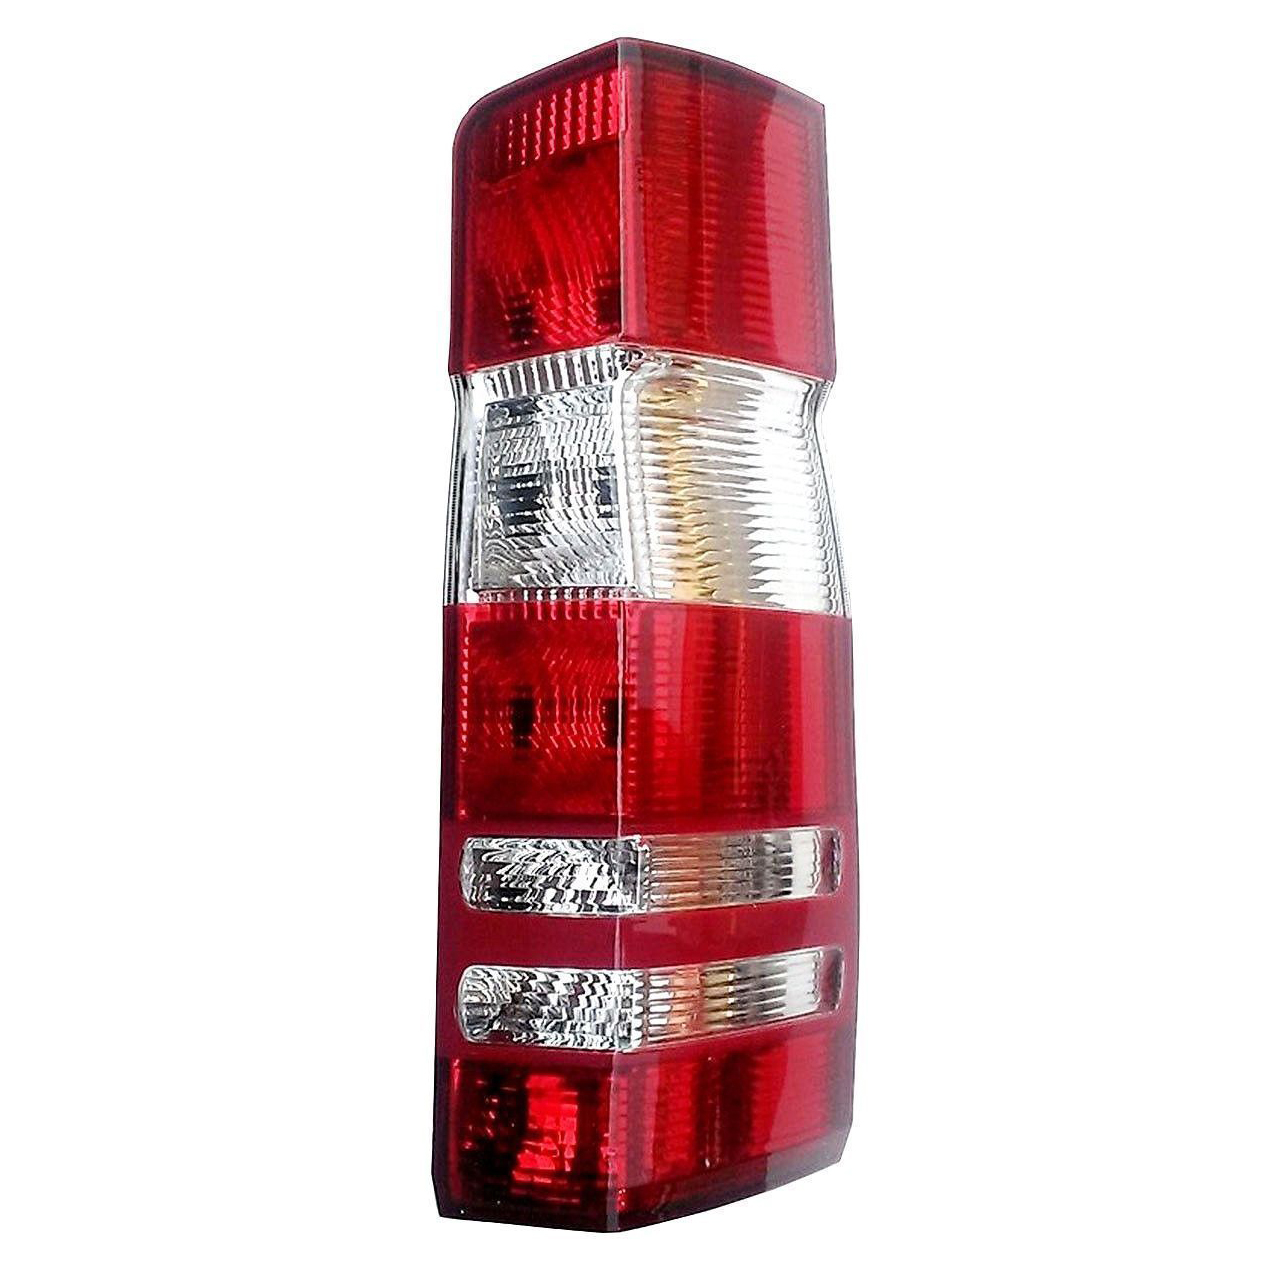 Mercedes Sprinter VAN REAR LAMP LIGHT RIGHT HAND ( UK Driver Side ) 2006 to 2011 – REAR LAMP LIGHT